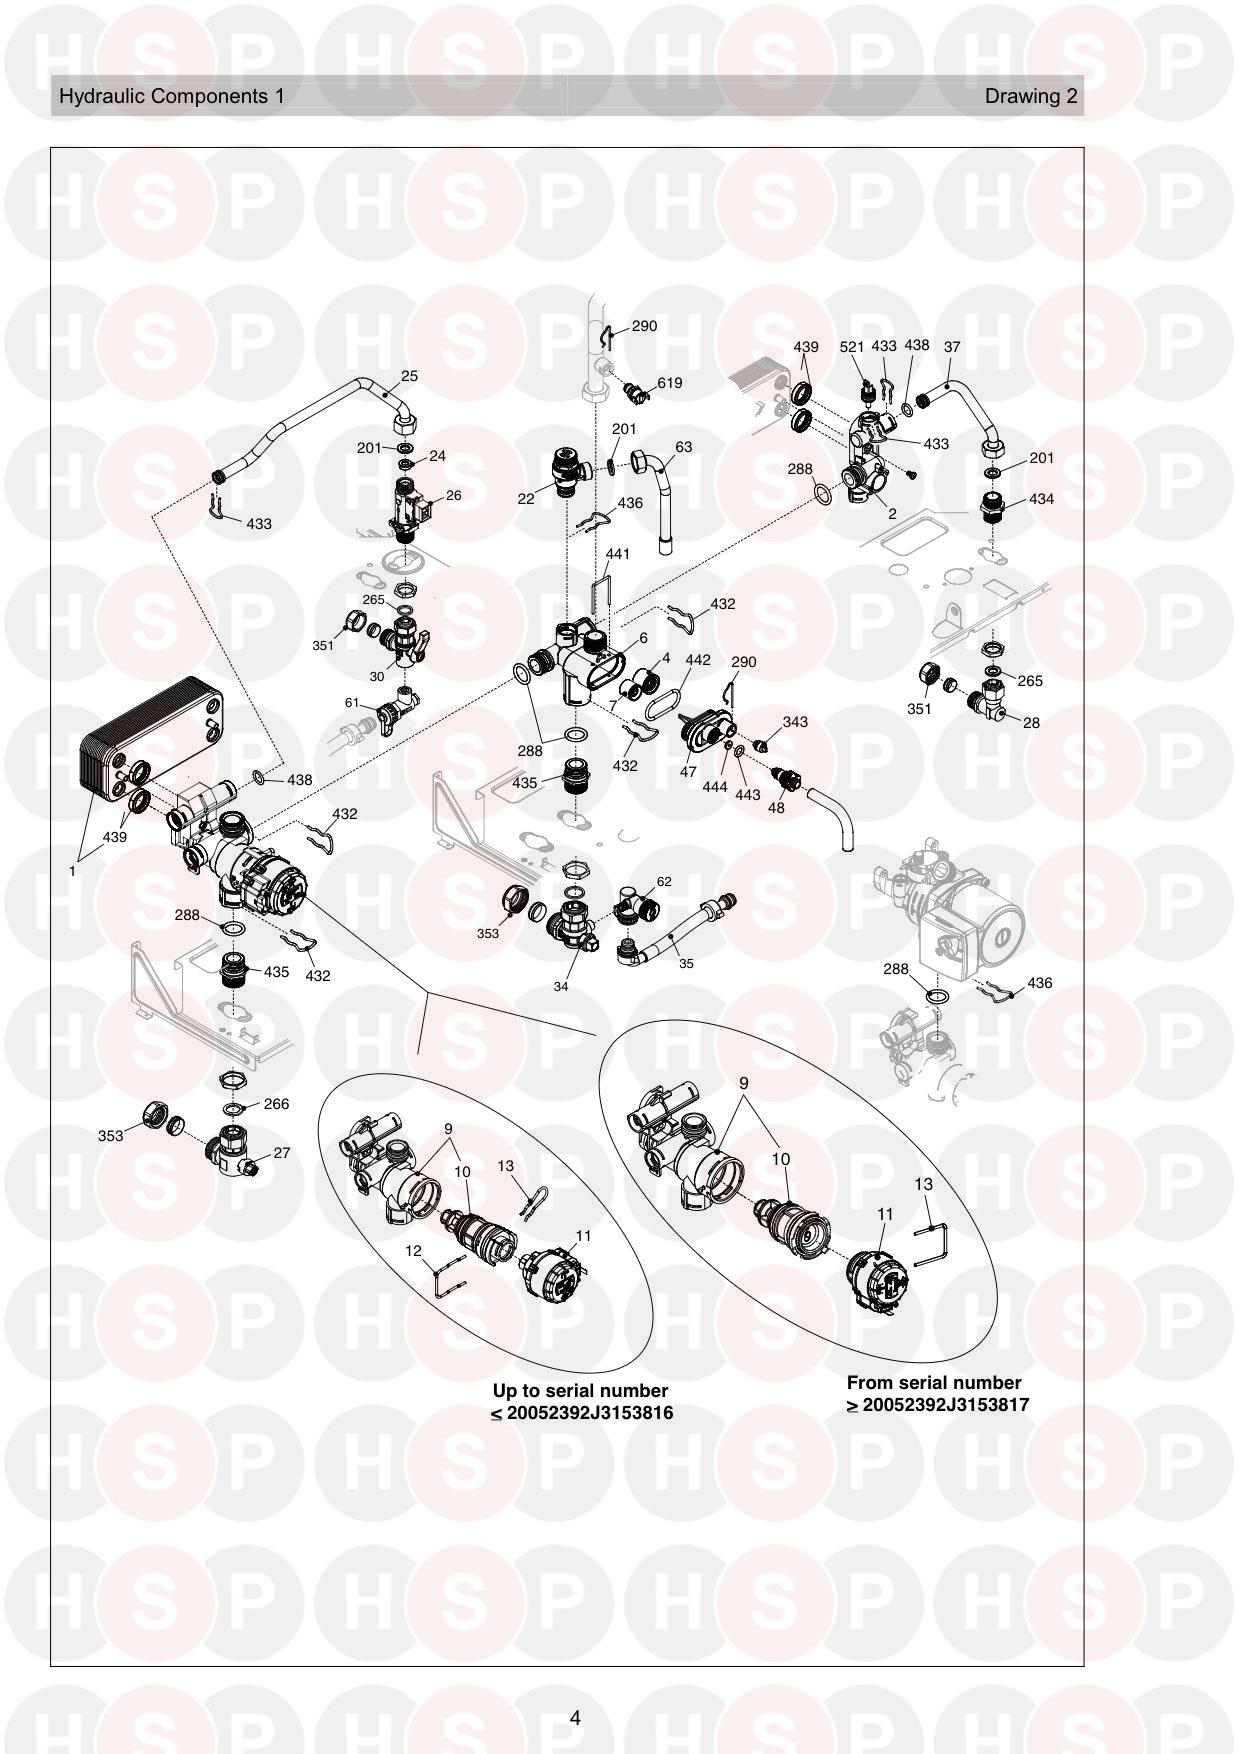 Hydraulics 1 diagram for Vokera Vision 30C (Modified) Post Ser # 20052392131 Rev 9 (12/2016)